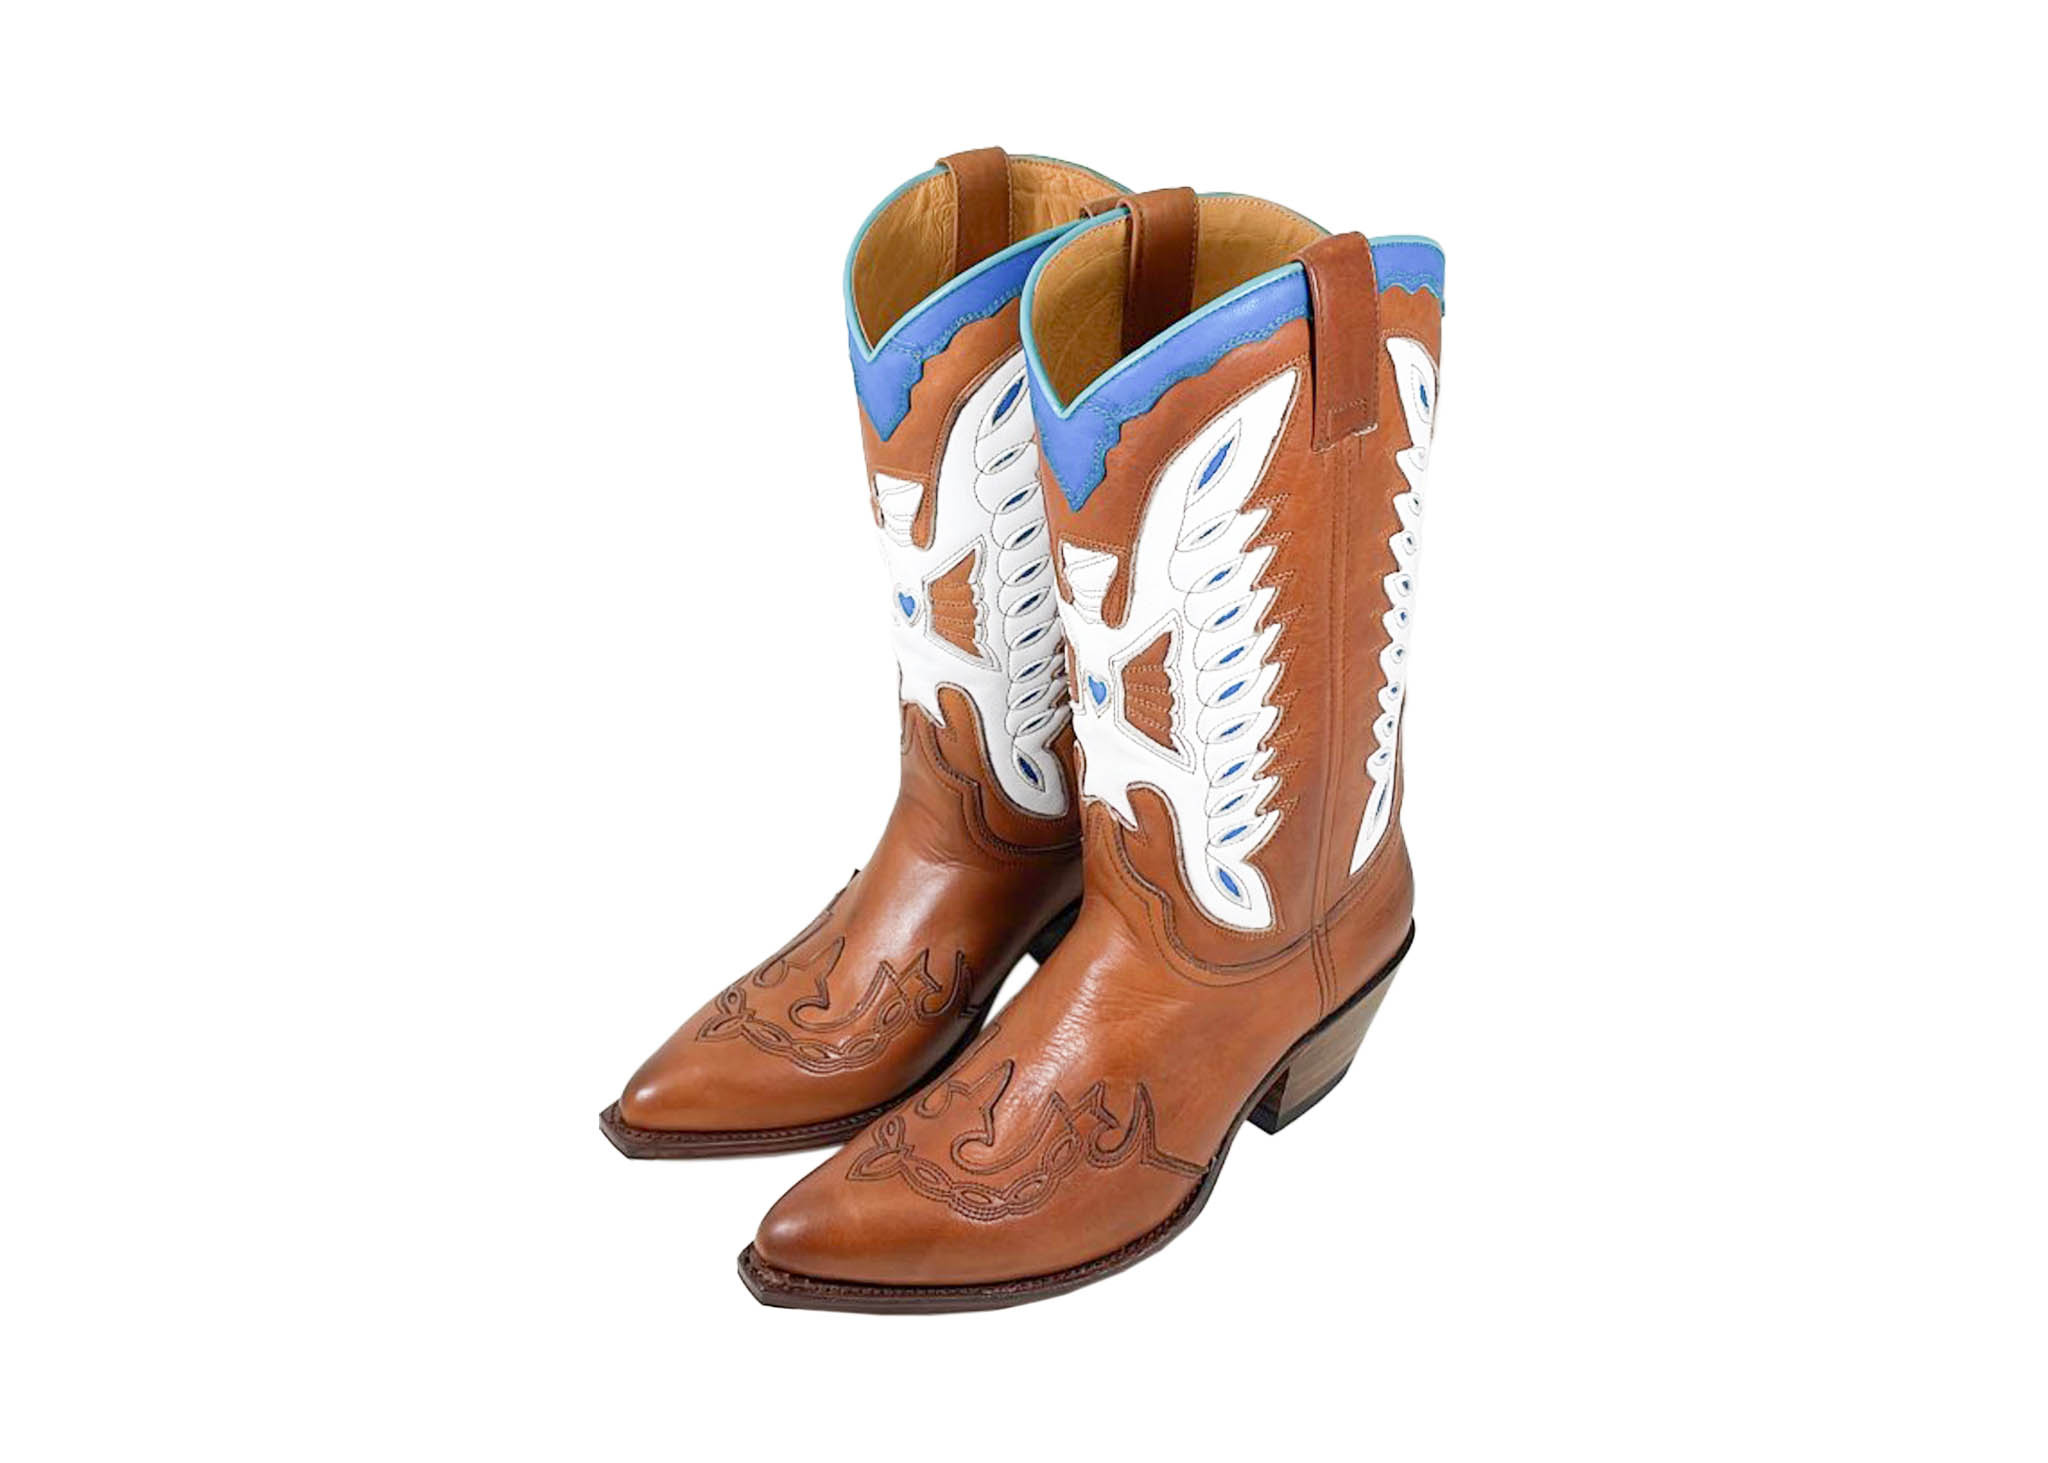 Sendra Sendra Western Boots 17294 Cognac